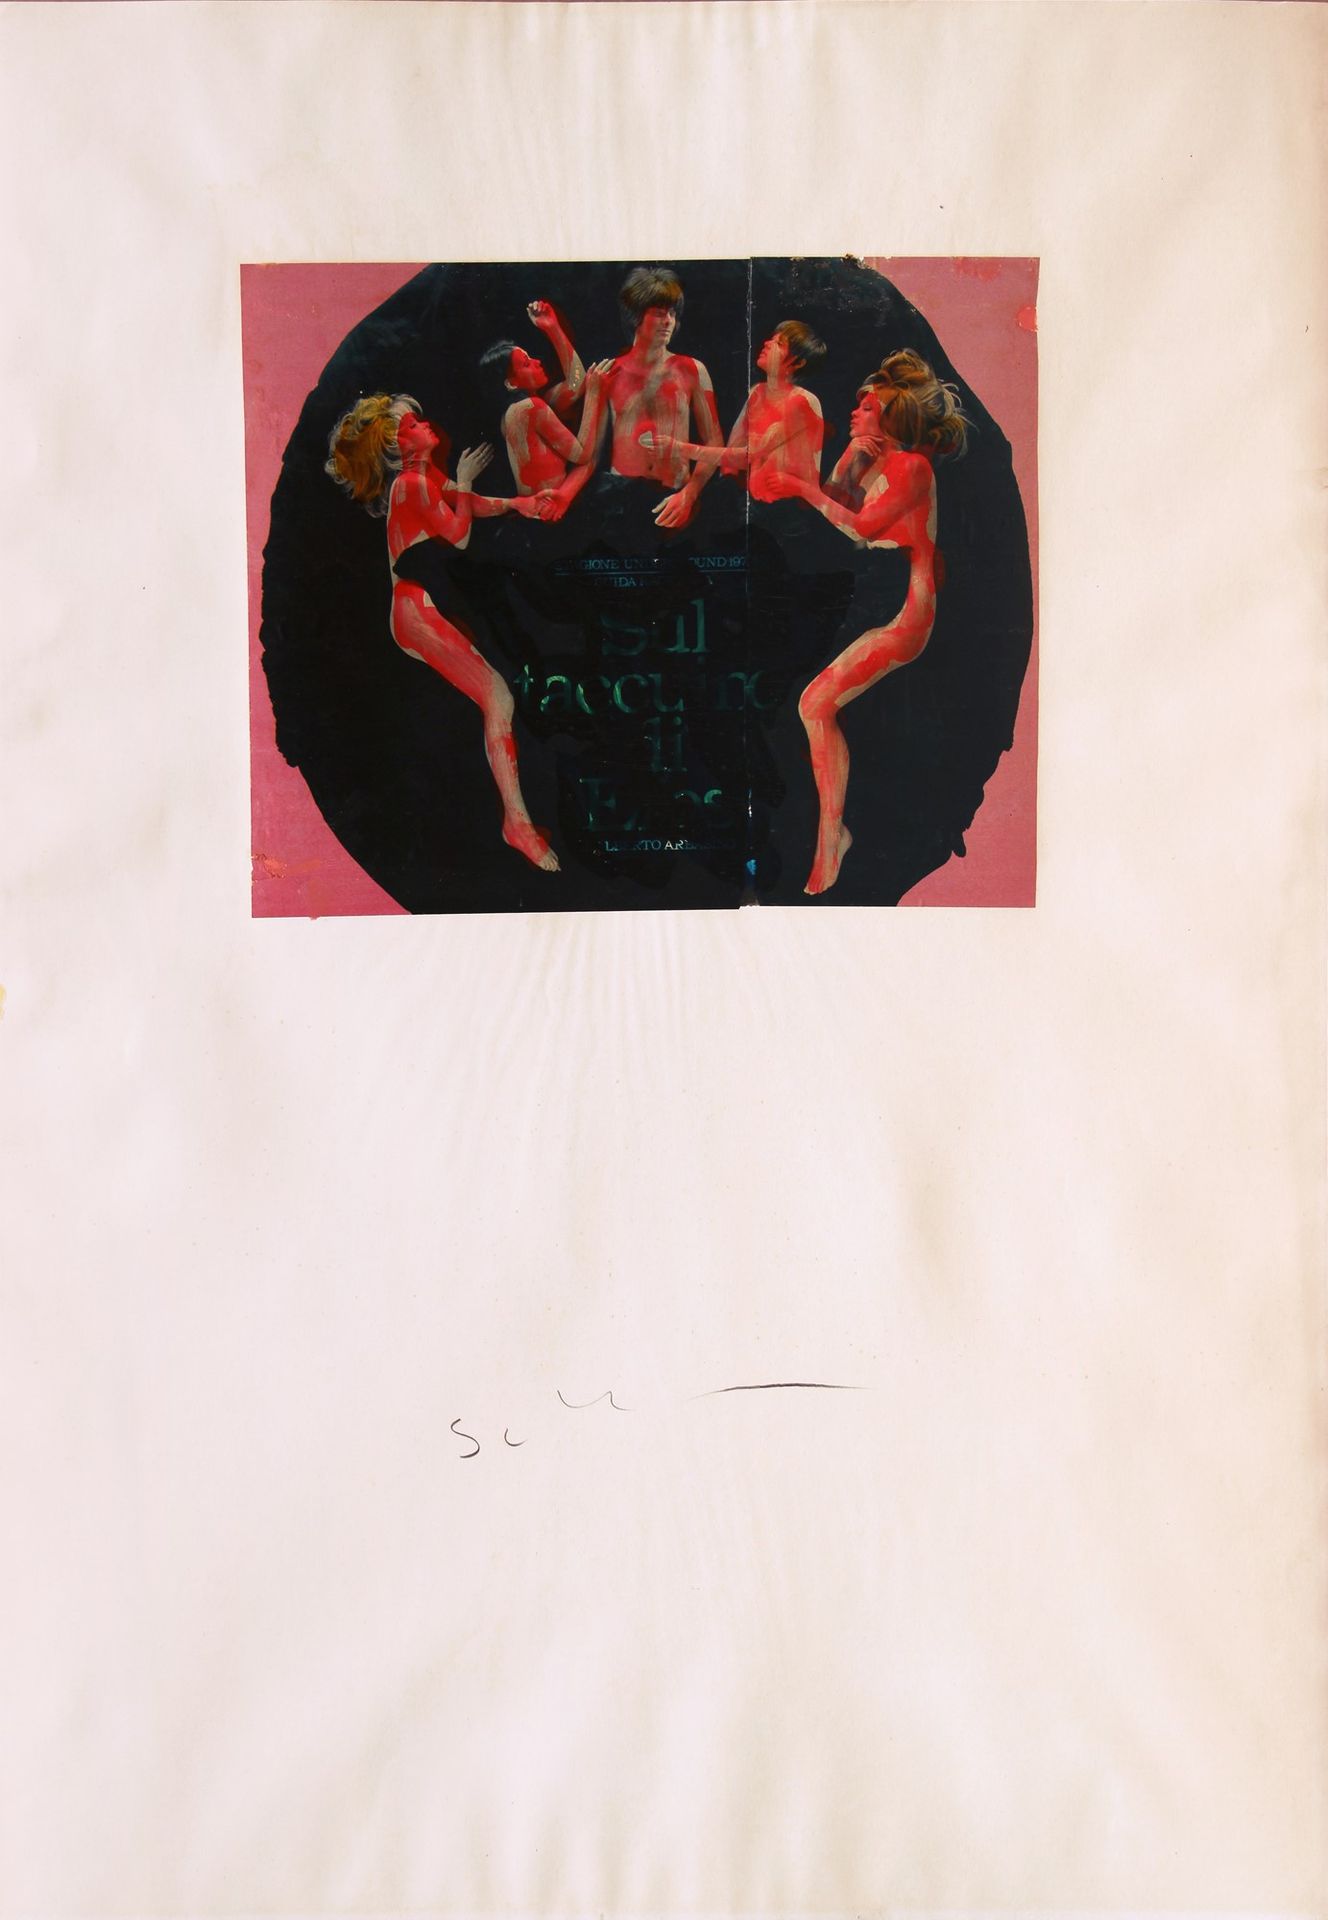 Mario SCHIFANO Untitled 1970, émail et collage sur carton, cm. 100x70

Certifica&hellip;